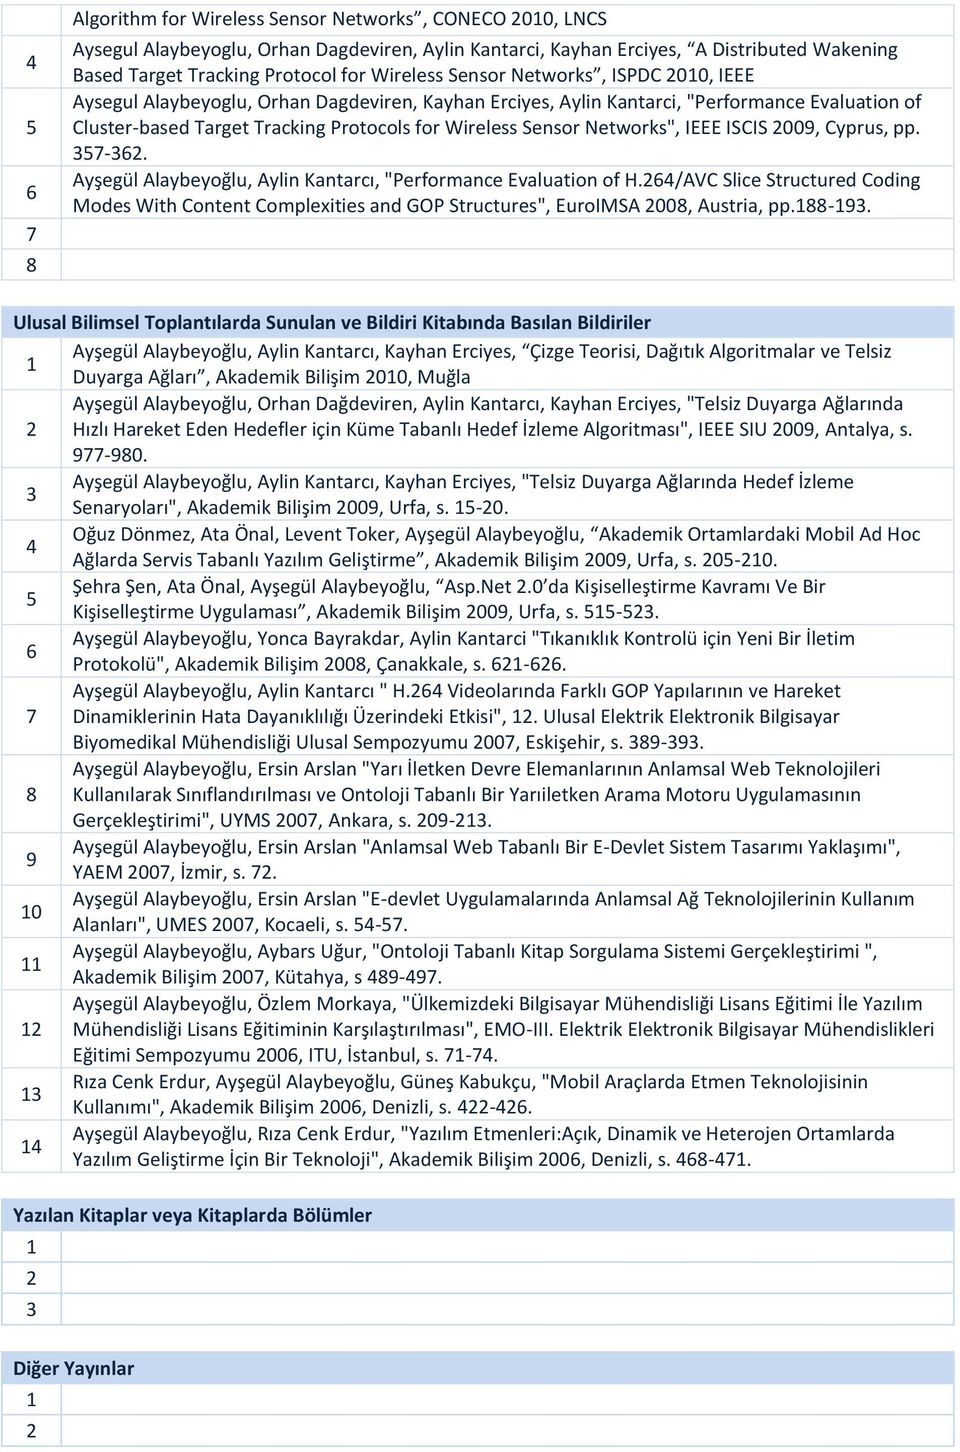 Networks", IEEE ISCIS 009, Cyprus, pp. -. Ayşegül Alaybeyoğlu, Aylin Kantarcı, "Performance Evaluation of H.